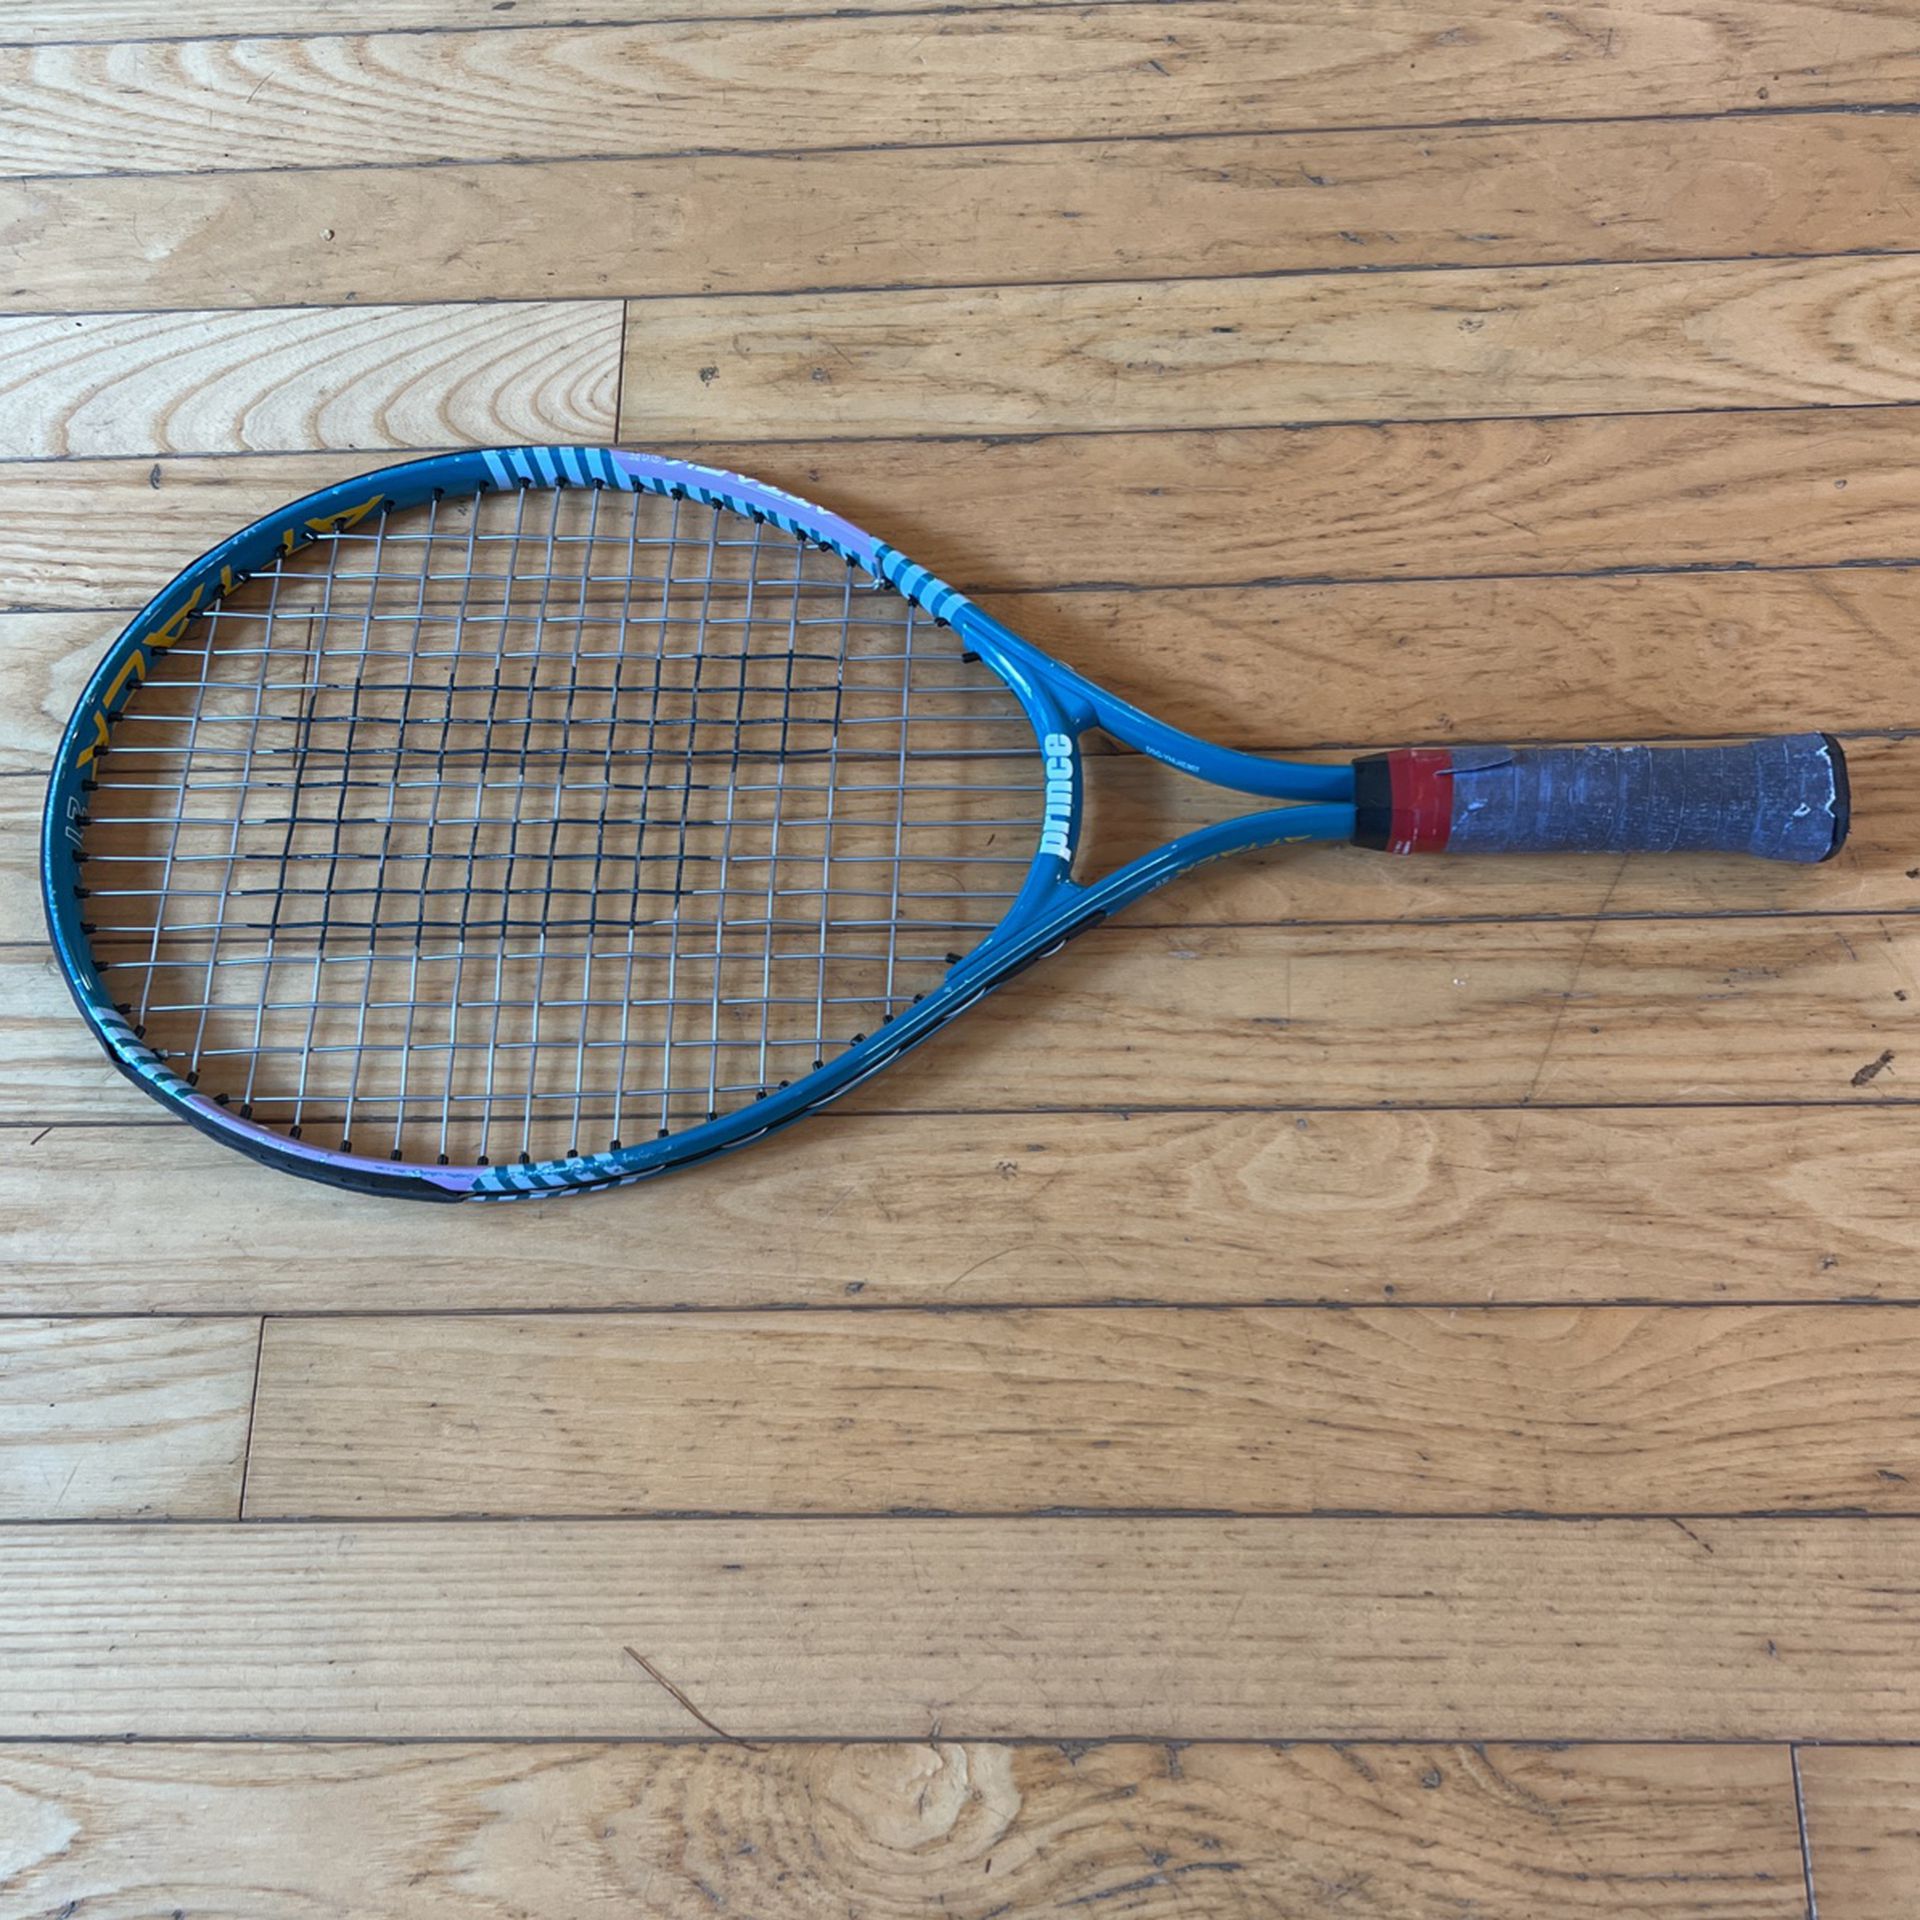 Tennis Racket, Size 21